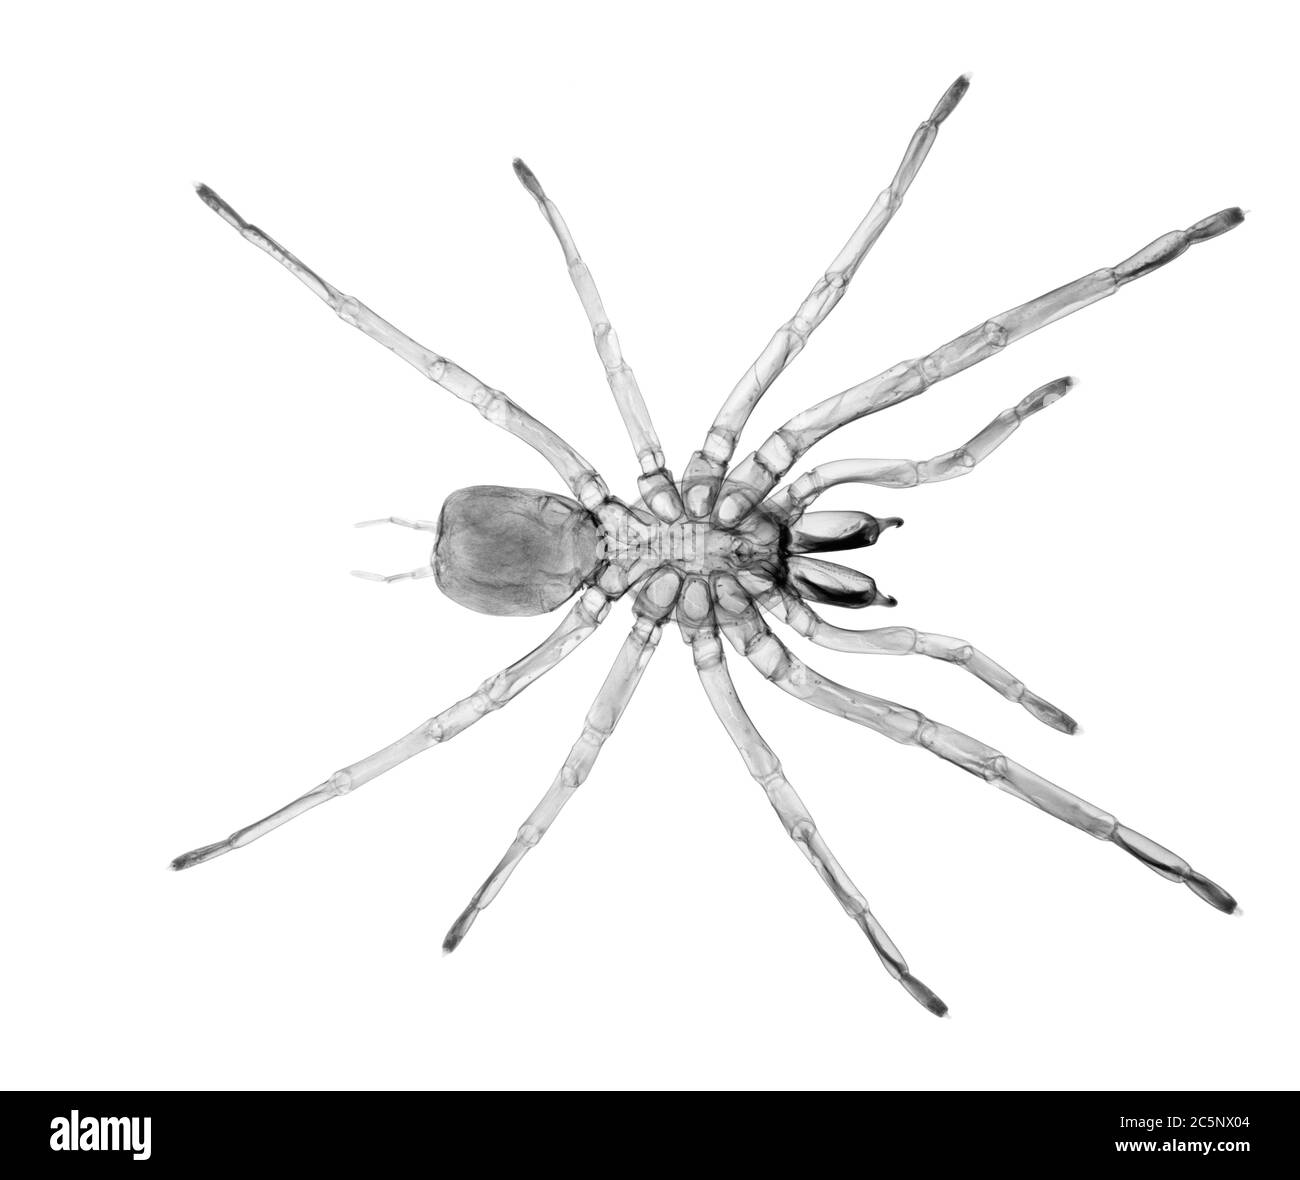 Tarantula spider (Grammostola rosea), X-ray. Stock Photo